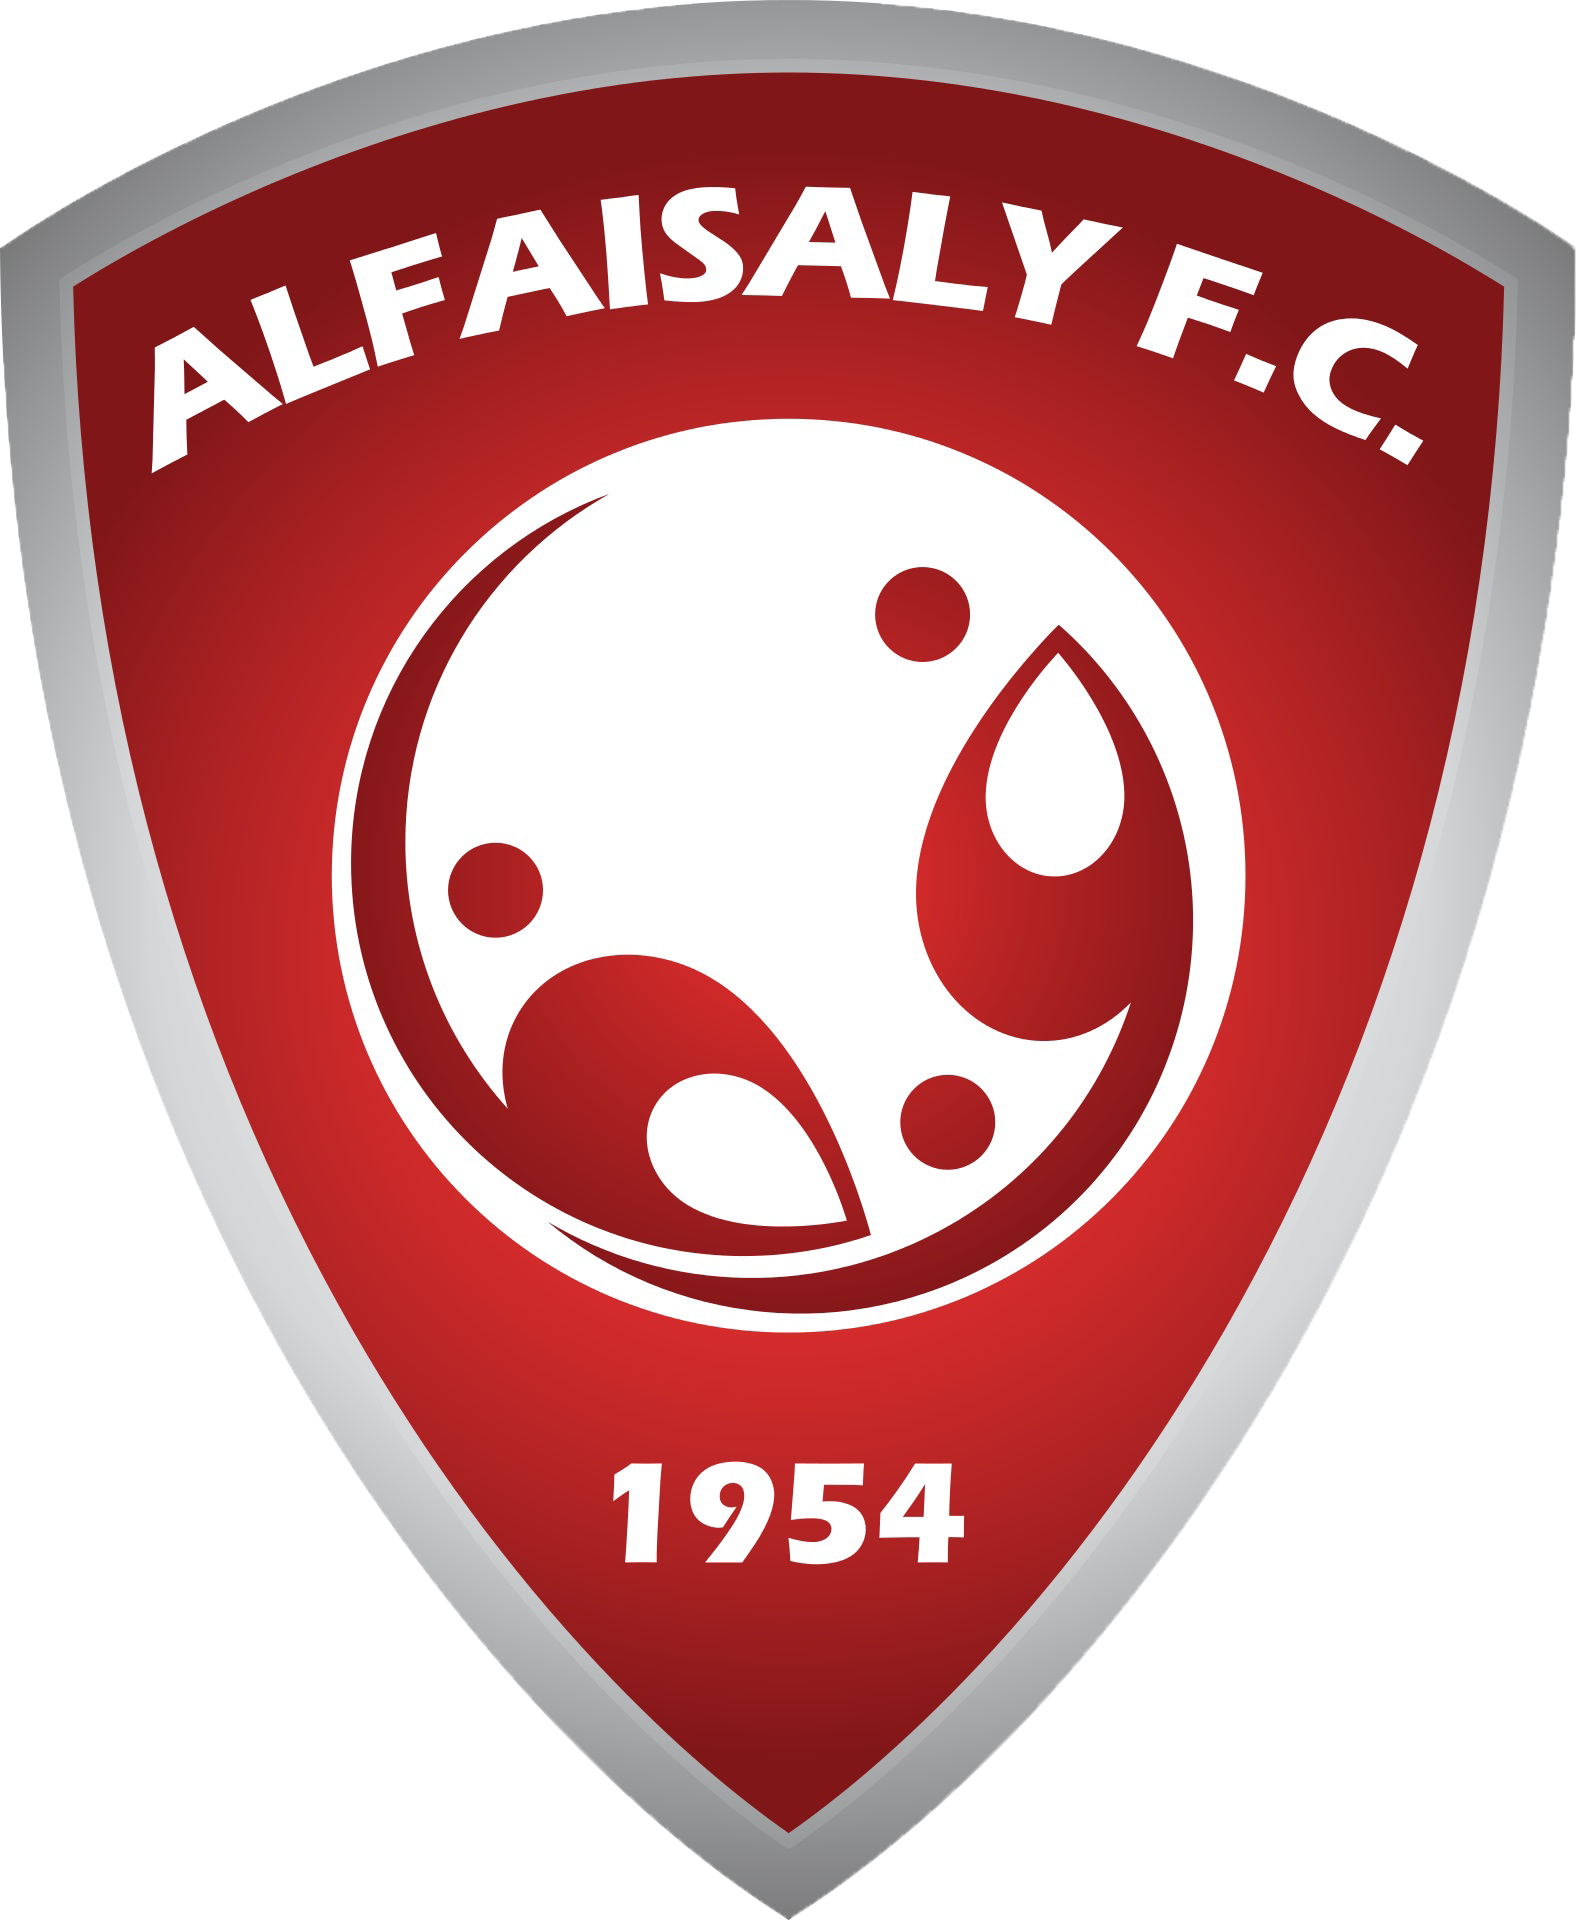 Al Faisaly Fc Fifa Football Gaming Wiki Fandom